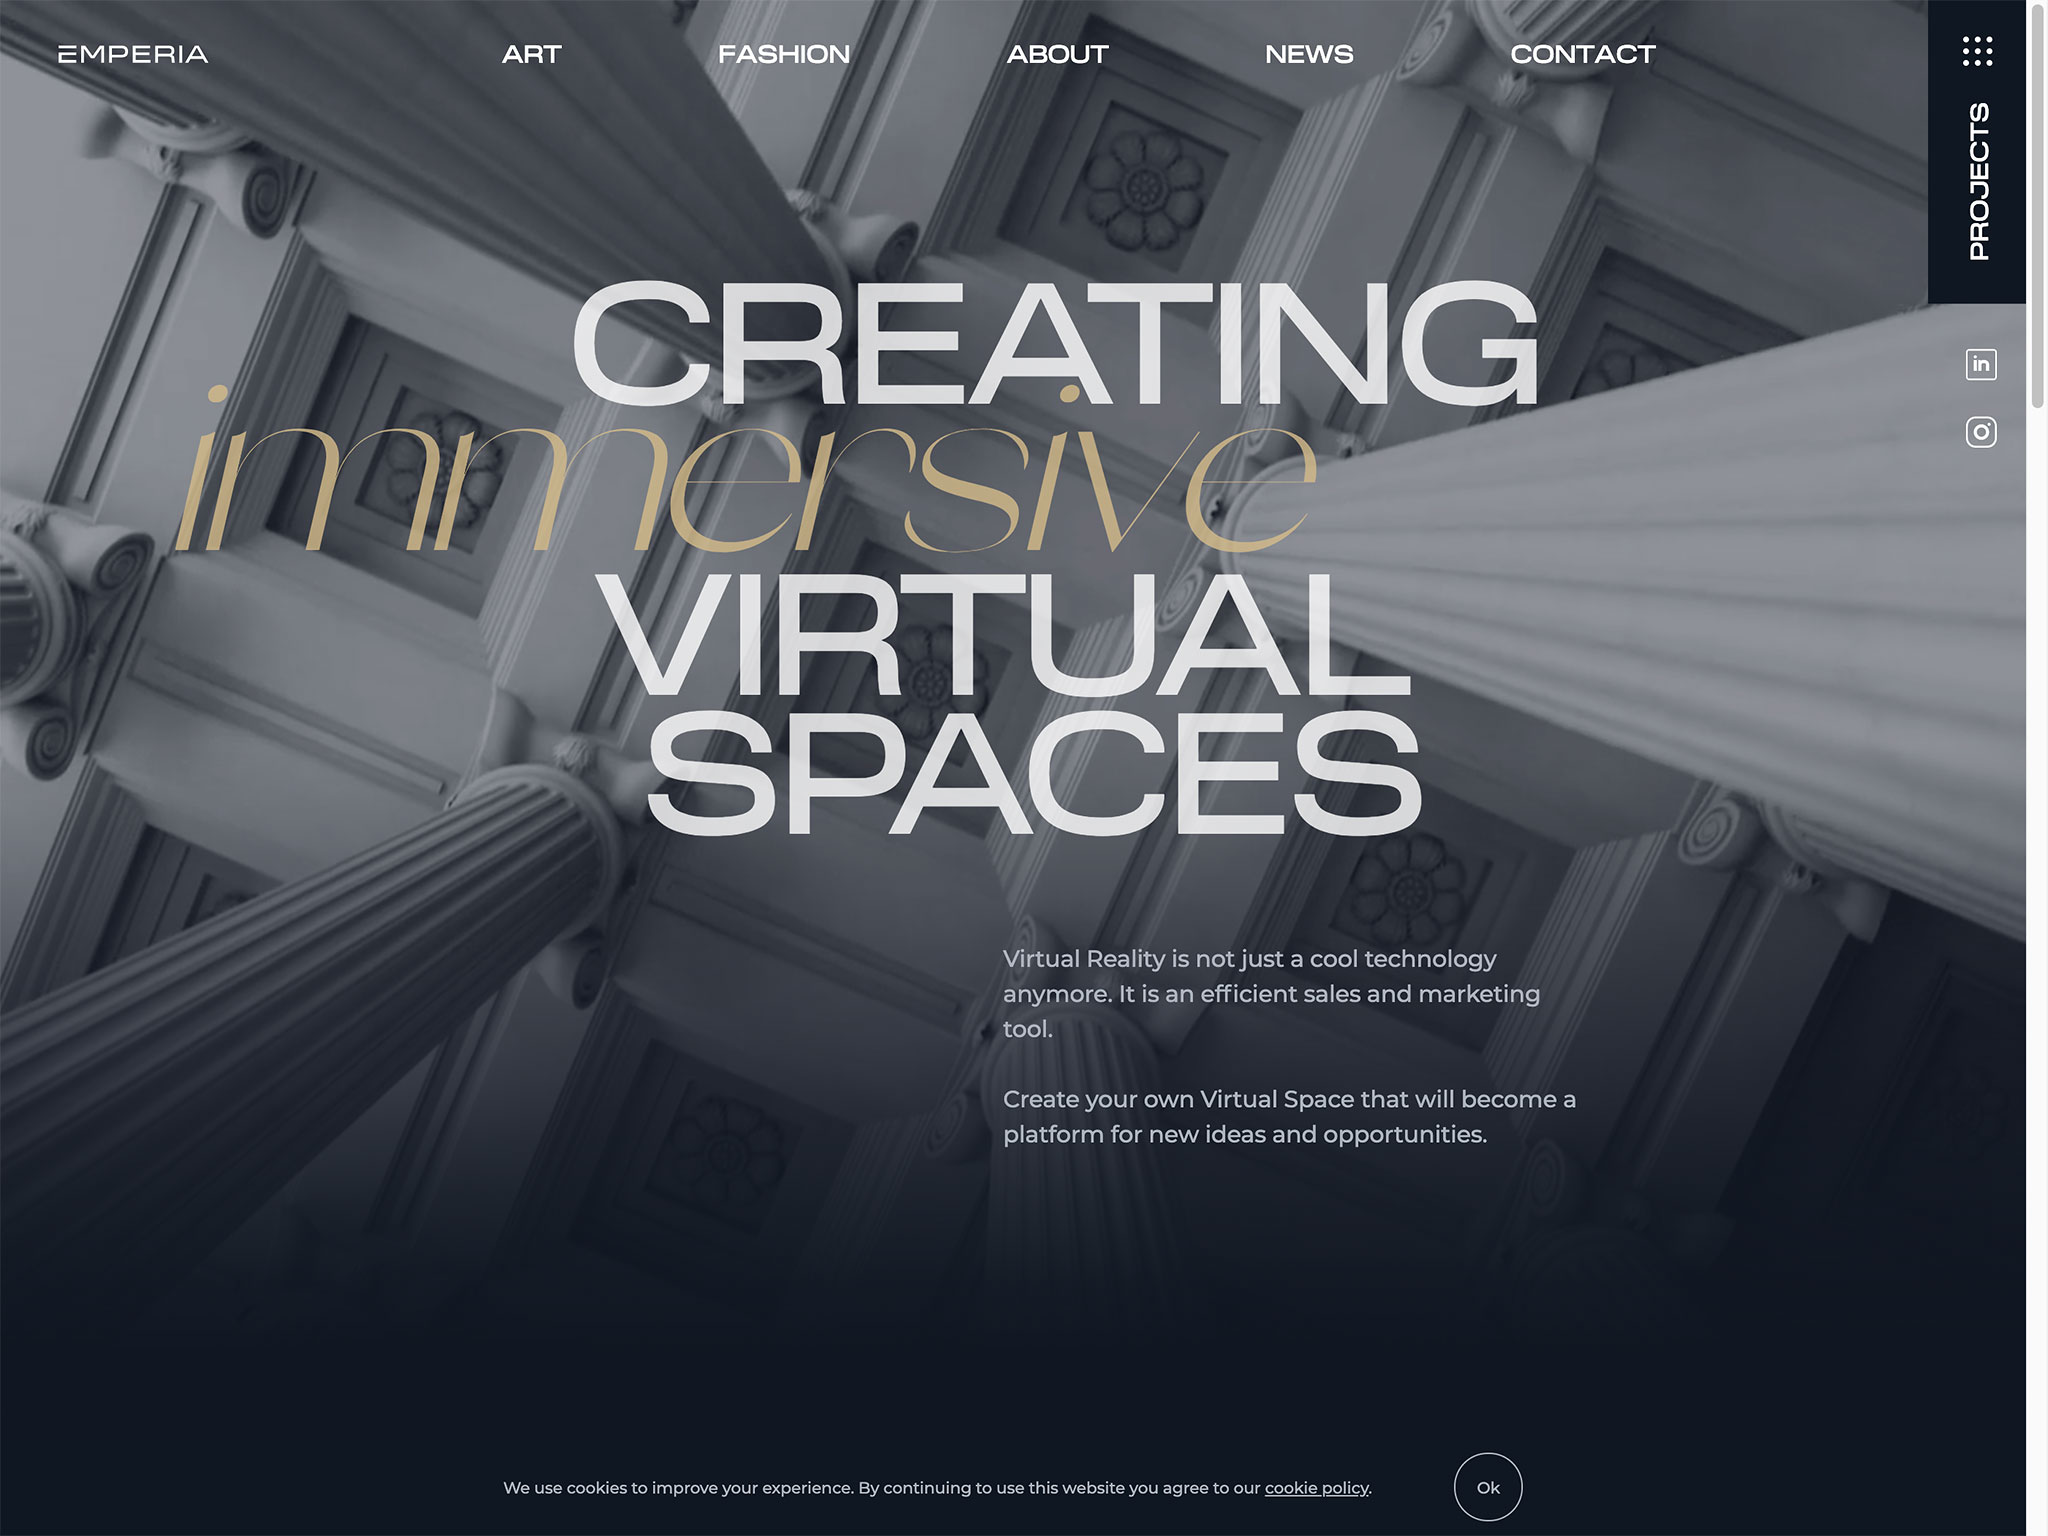 Creating virtual experiences for Art & Fashion – Emperia